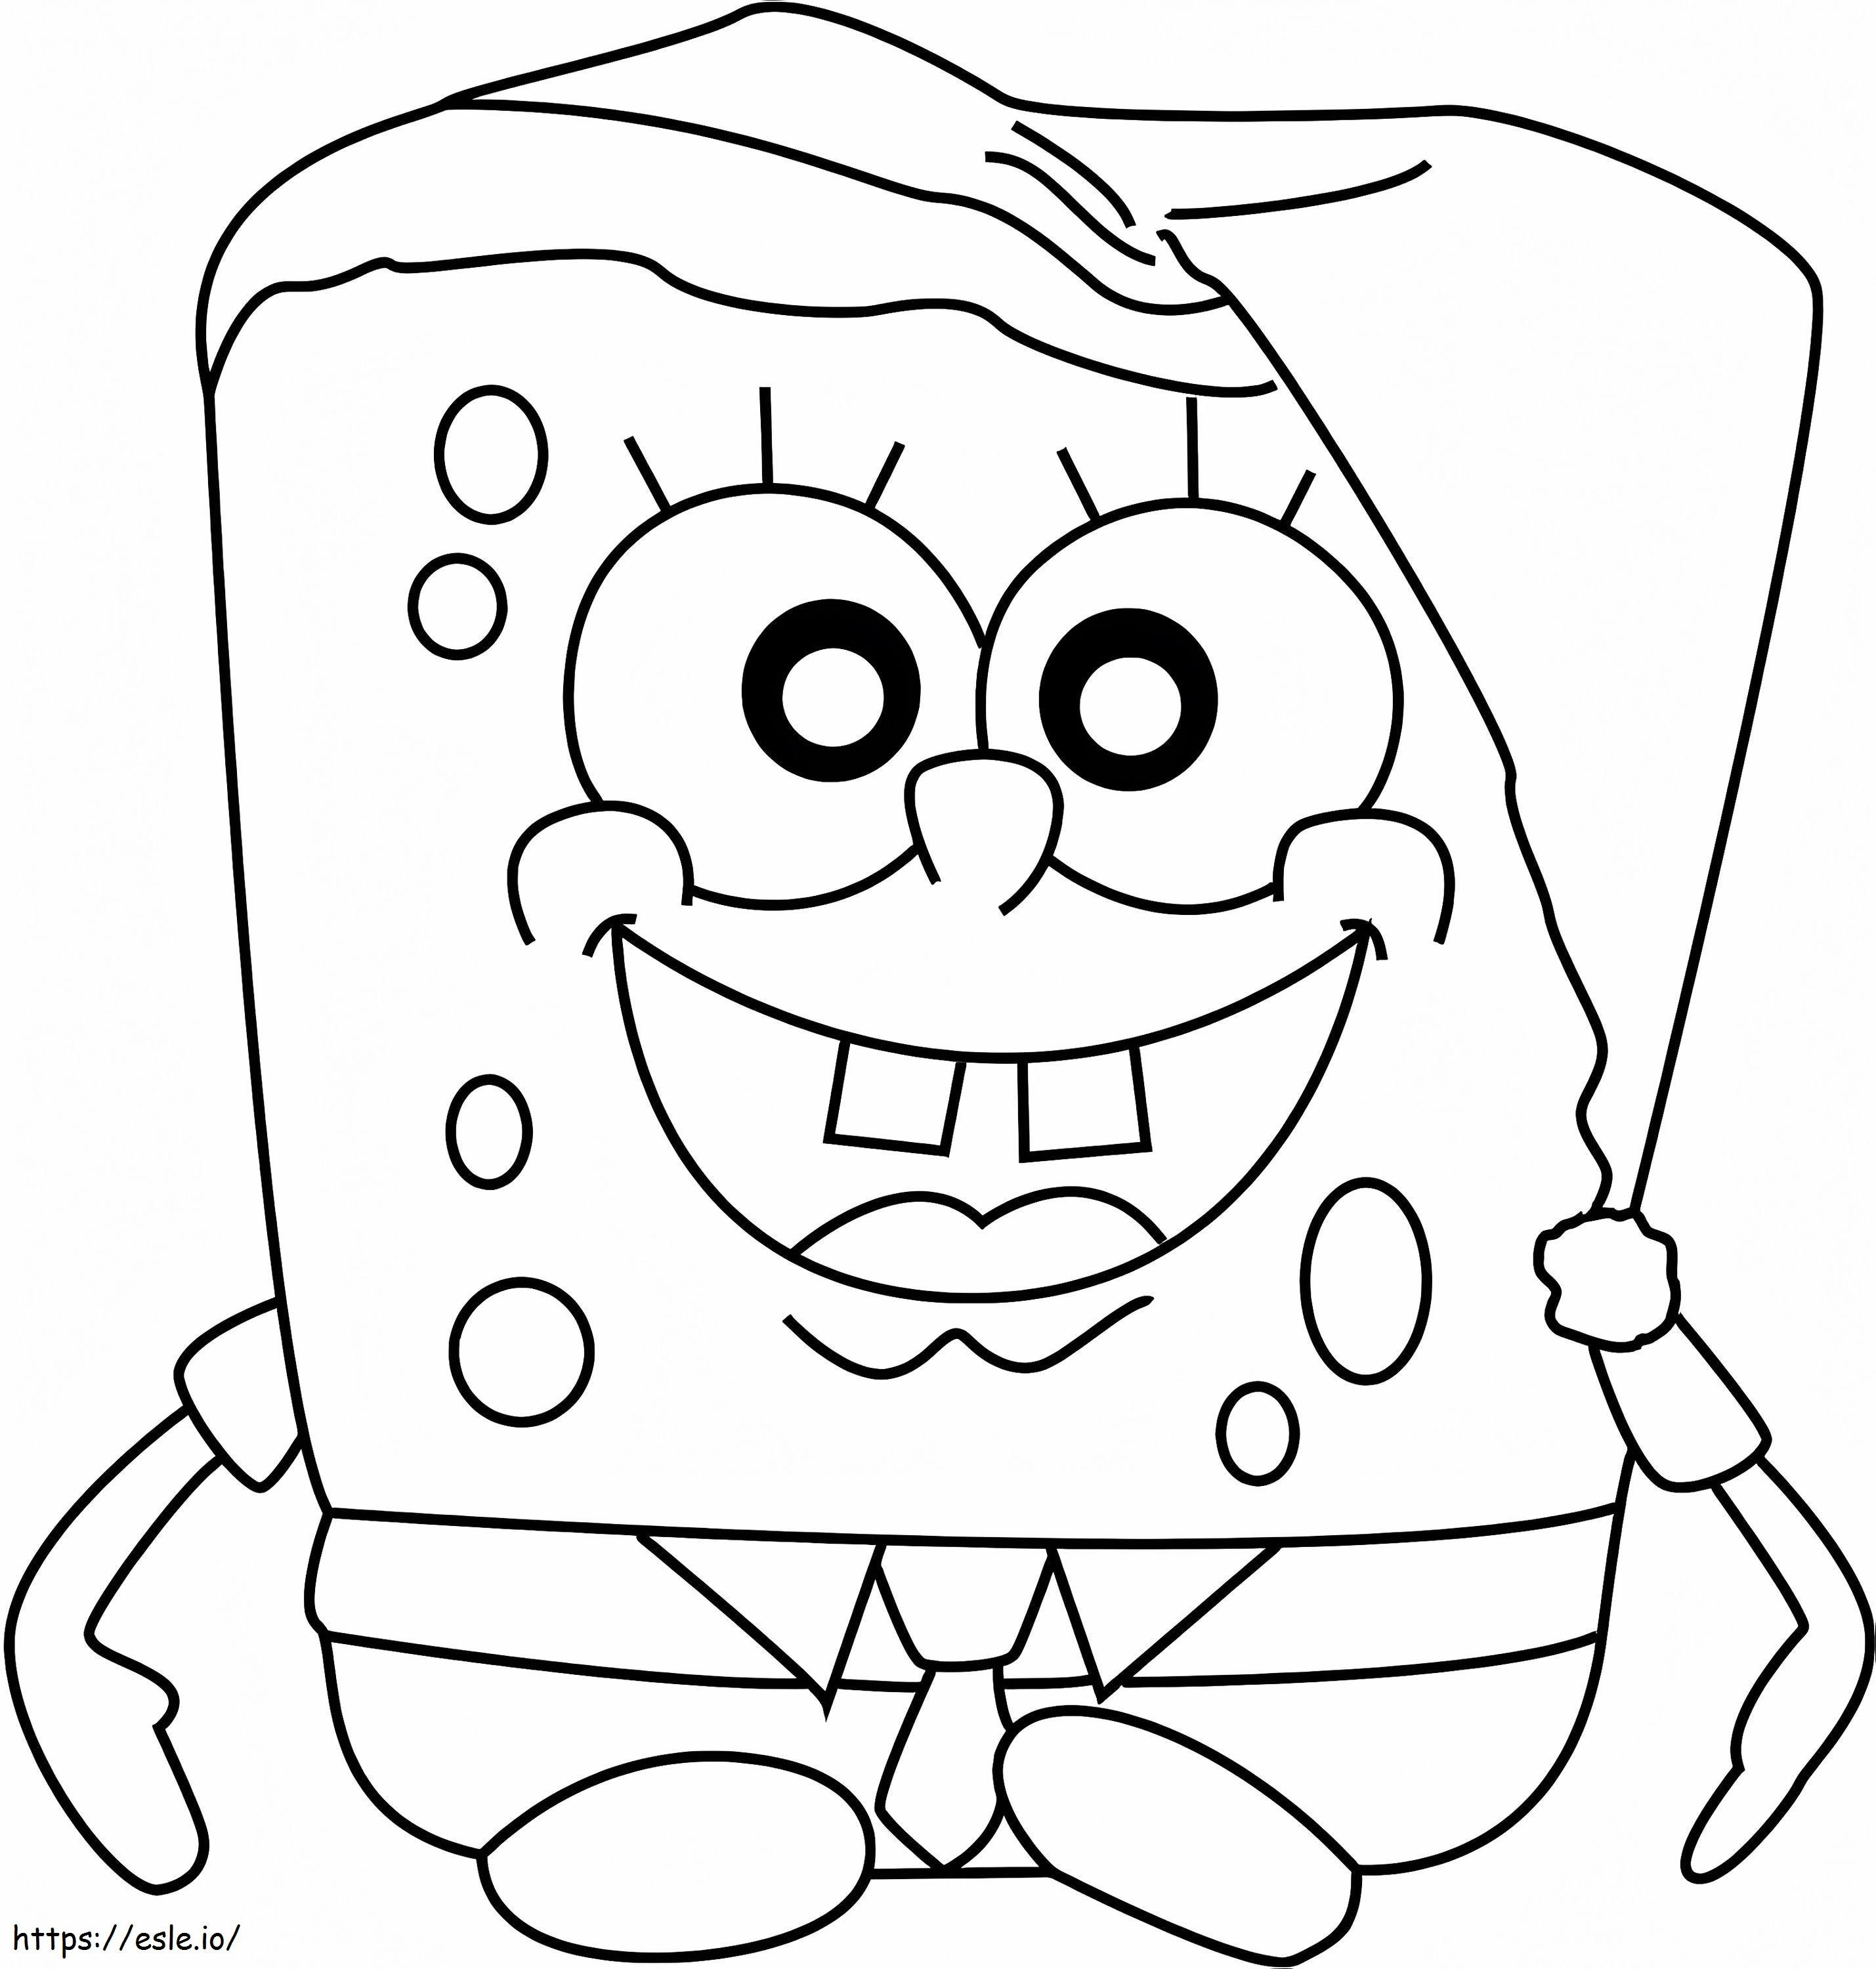 Spongebob At Christmas coloring page